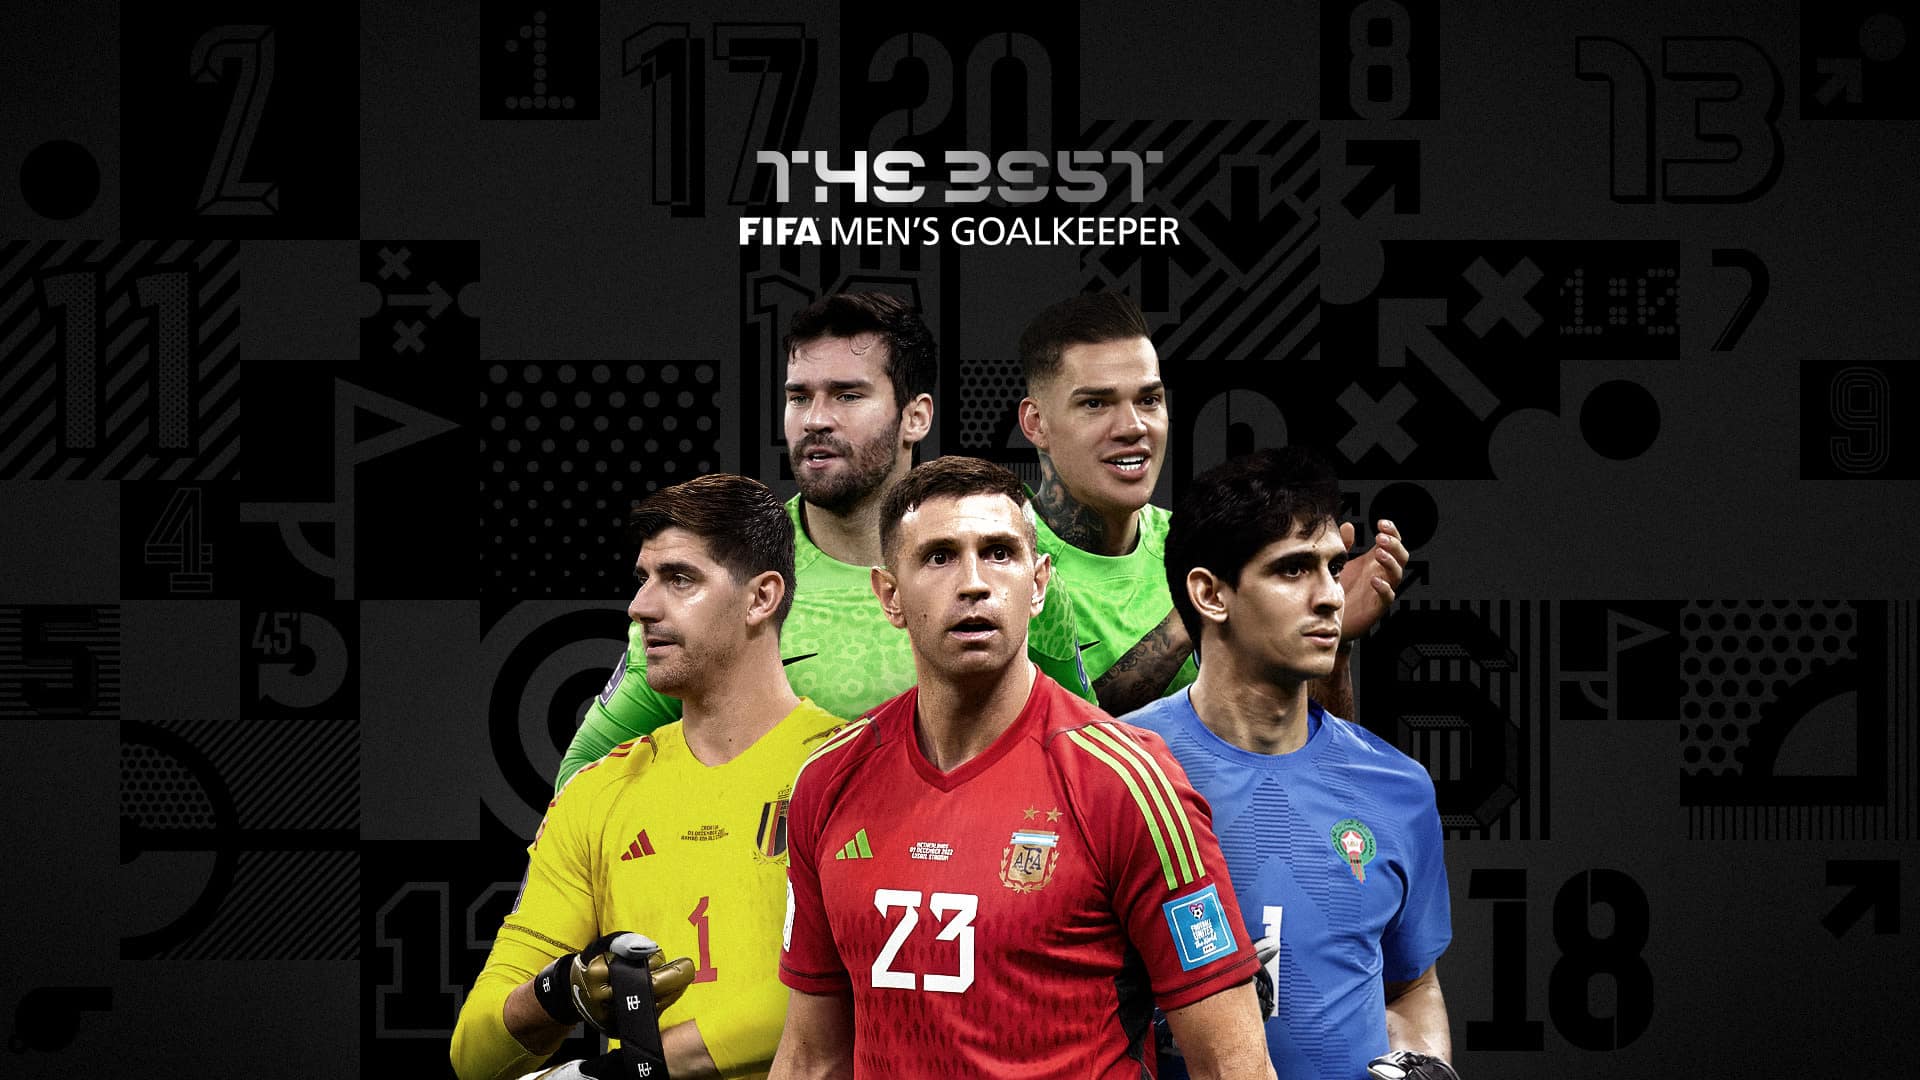 Full list of nominees for 2022 FIFA Best Awards